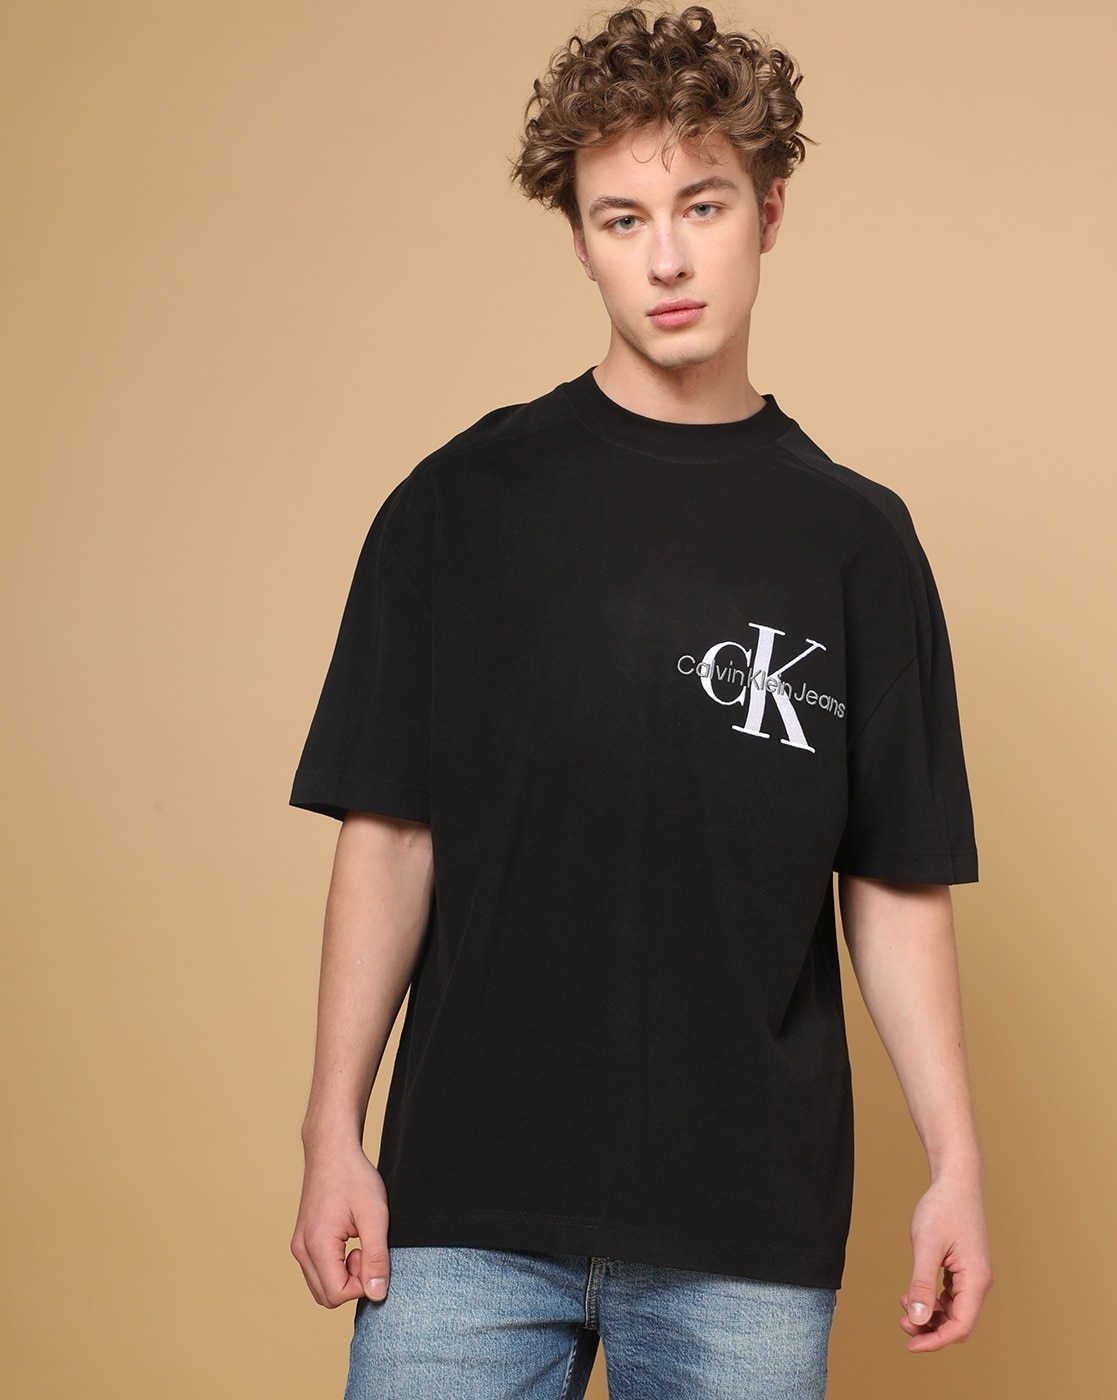 Buy Black Men Online Calvin Tshirts by Jeans for Klein